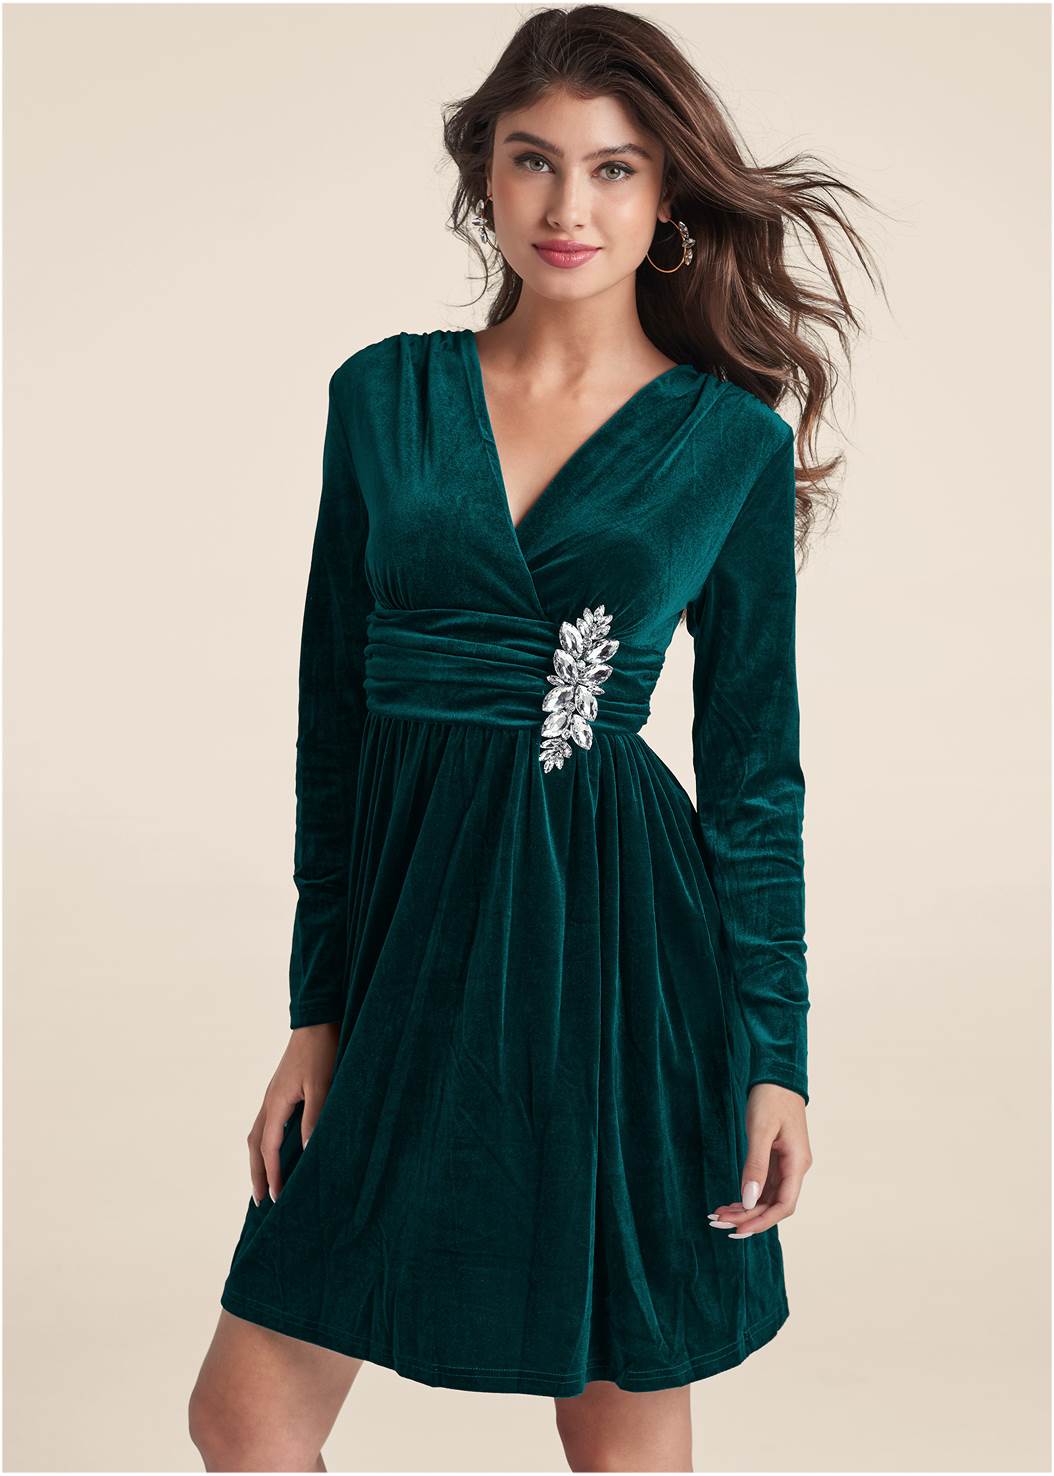 Embellished Velvet Dress in Green | VENUS